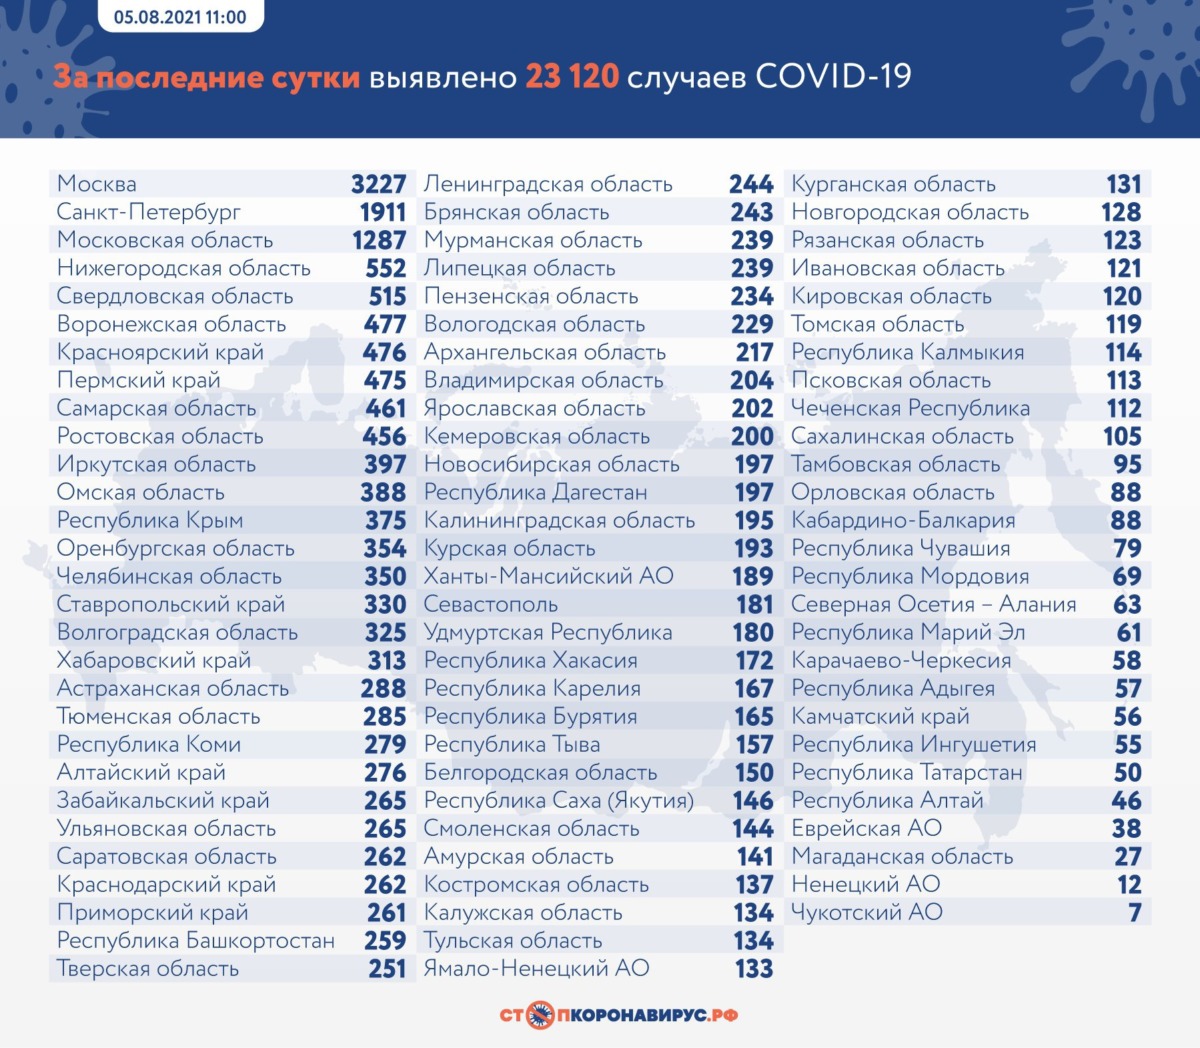 Статистика коронавируса в России на 5 августа